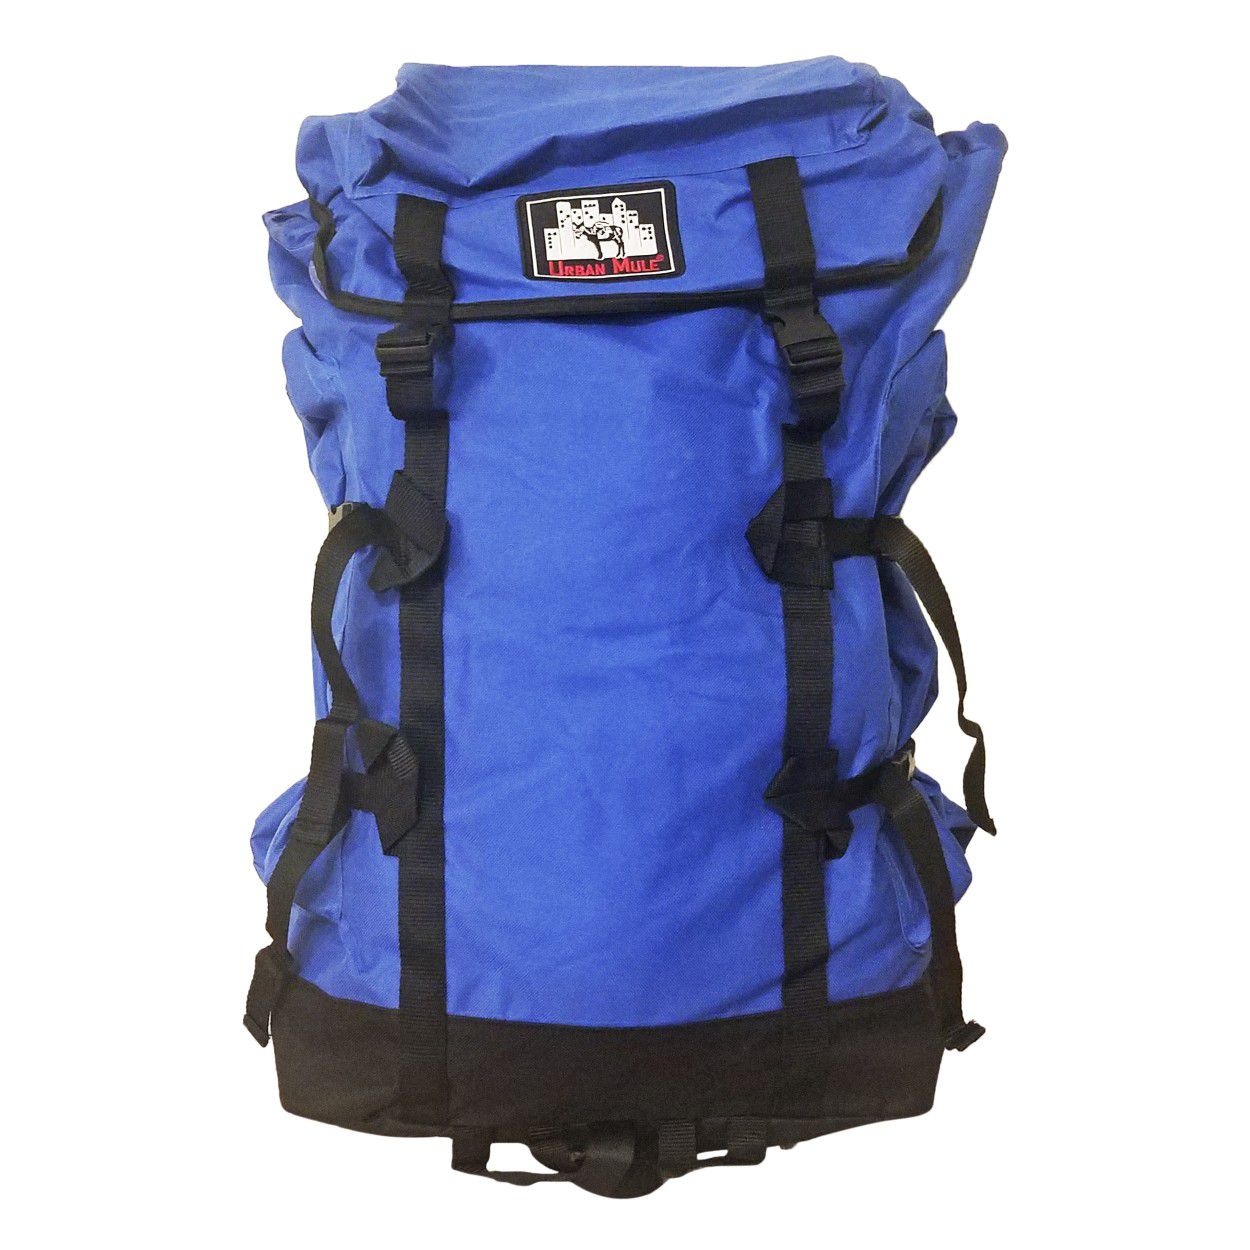 Brand new Urban Mule Blue x-large Backpack